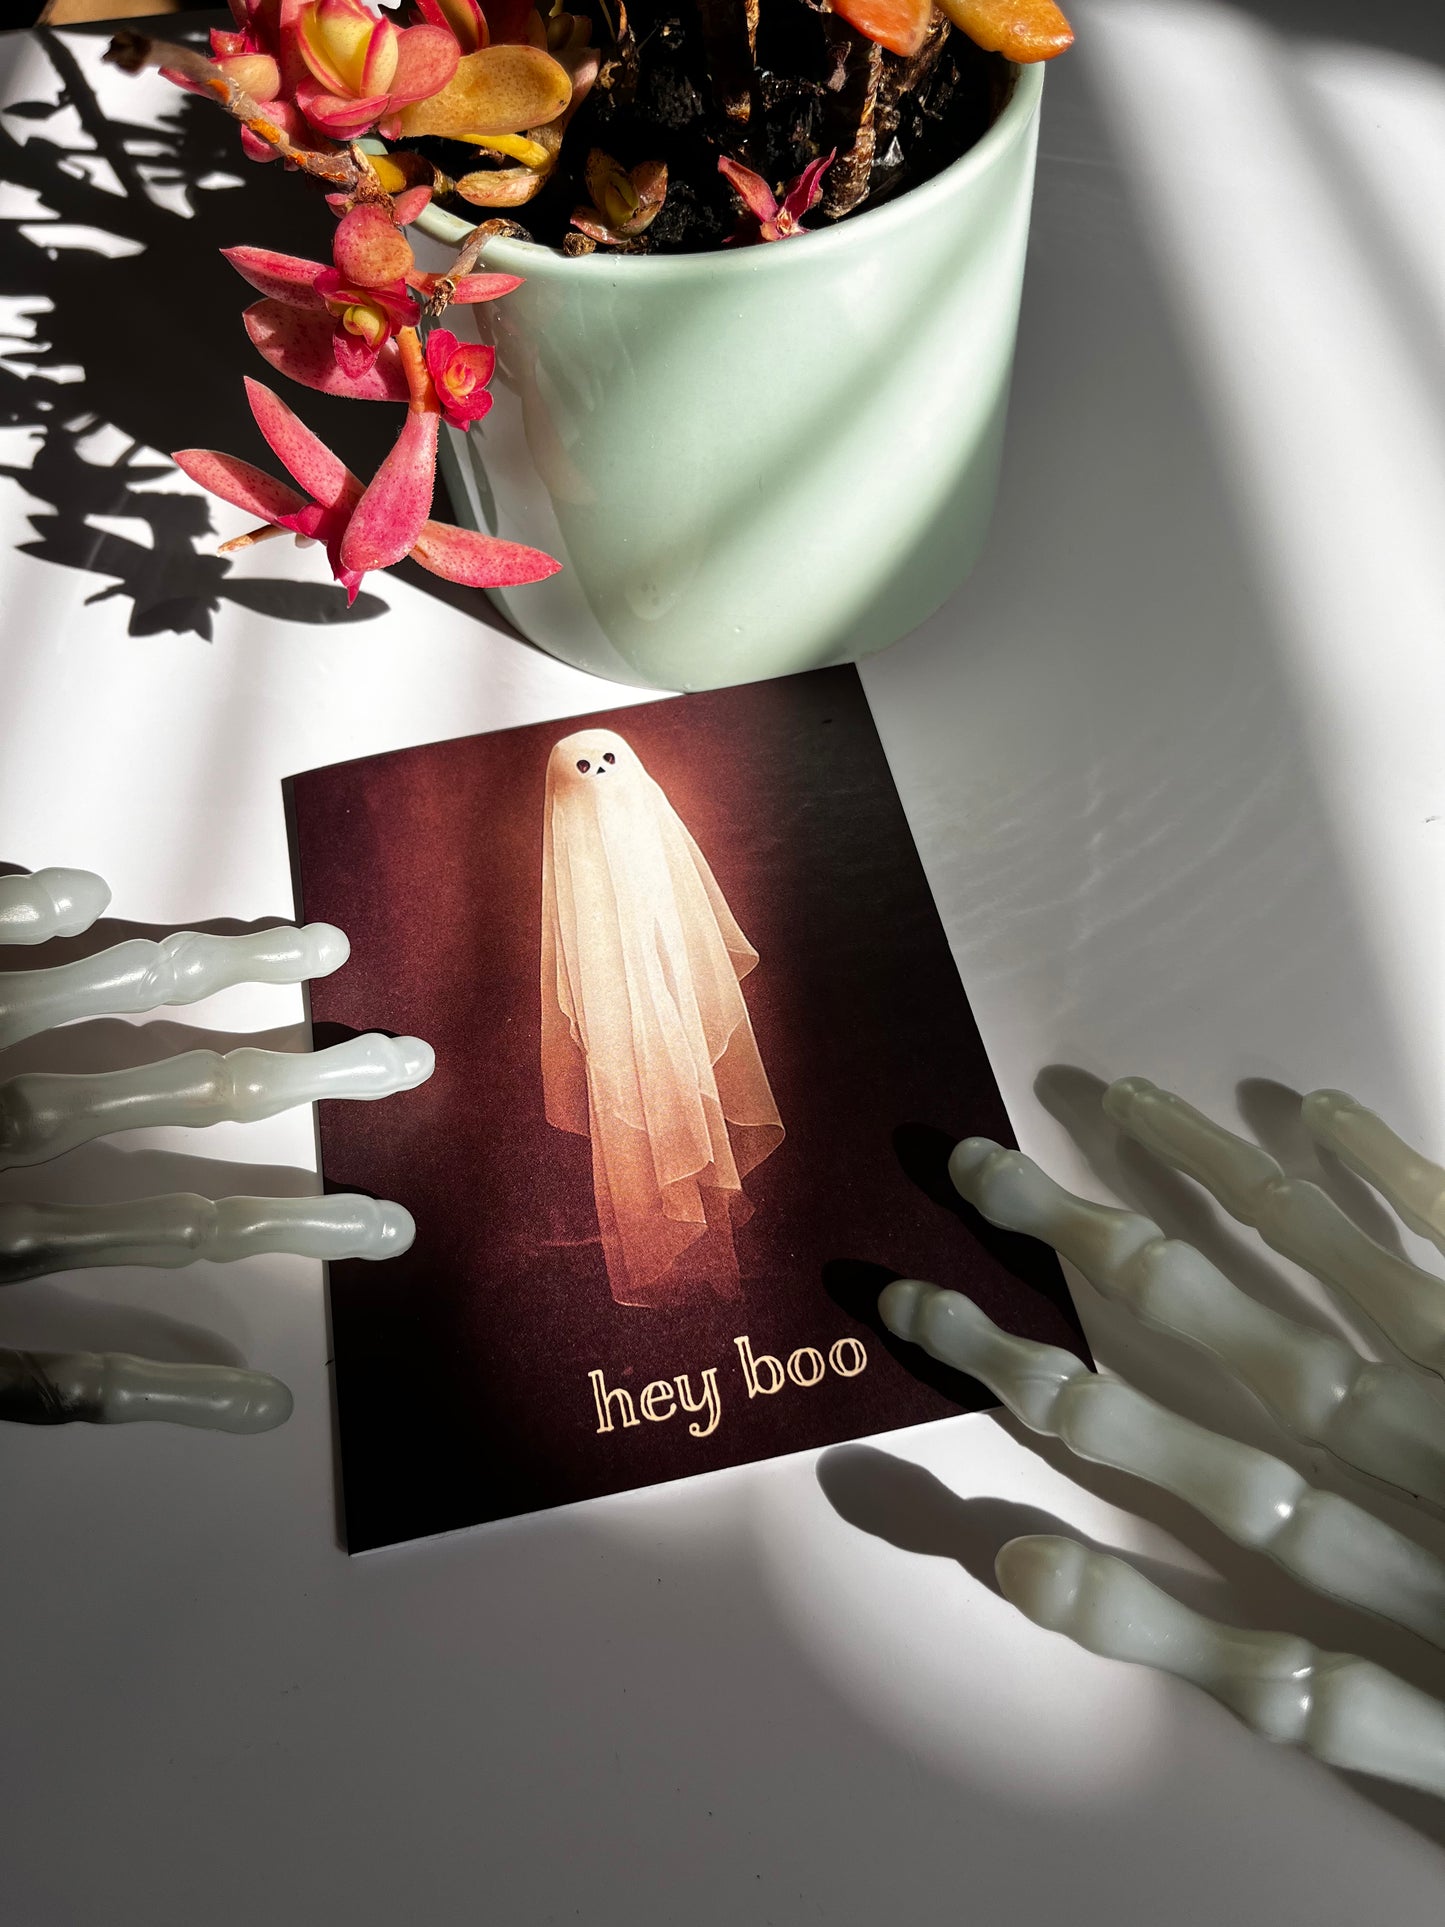 Hey Boo Cute Ghost - Funny Halloween Love Friendship Card